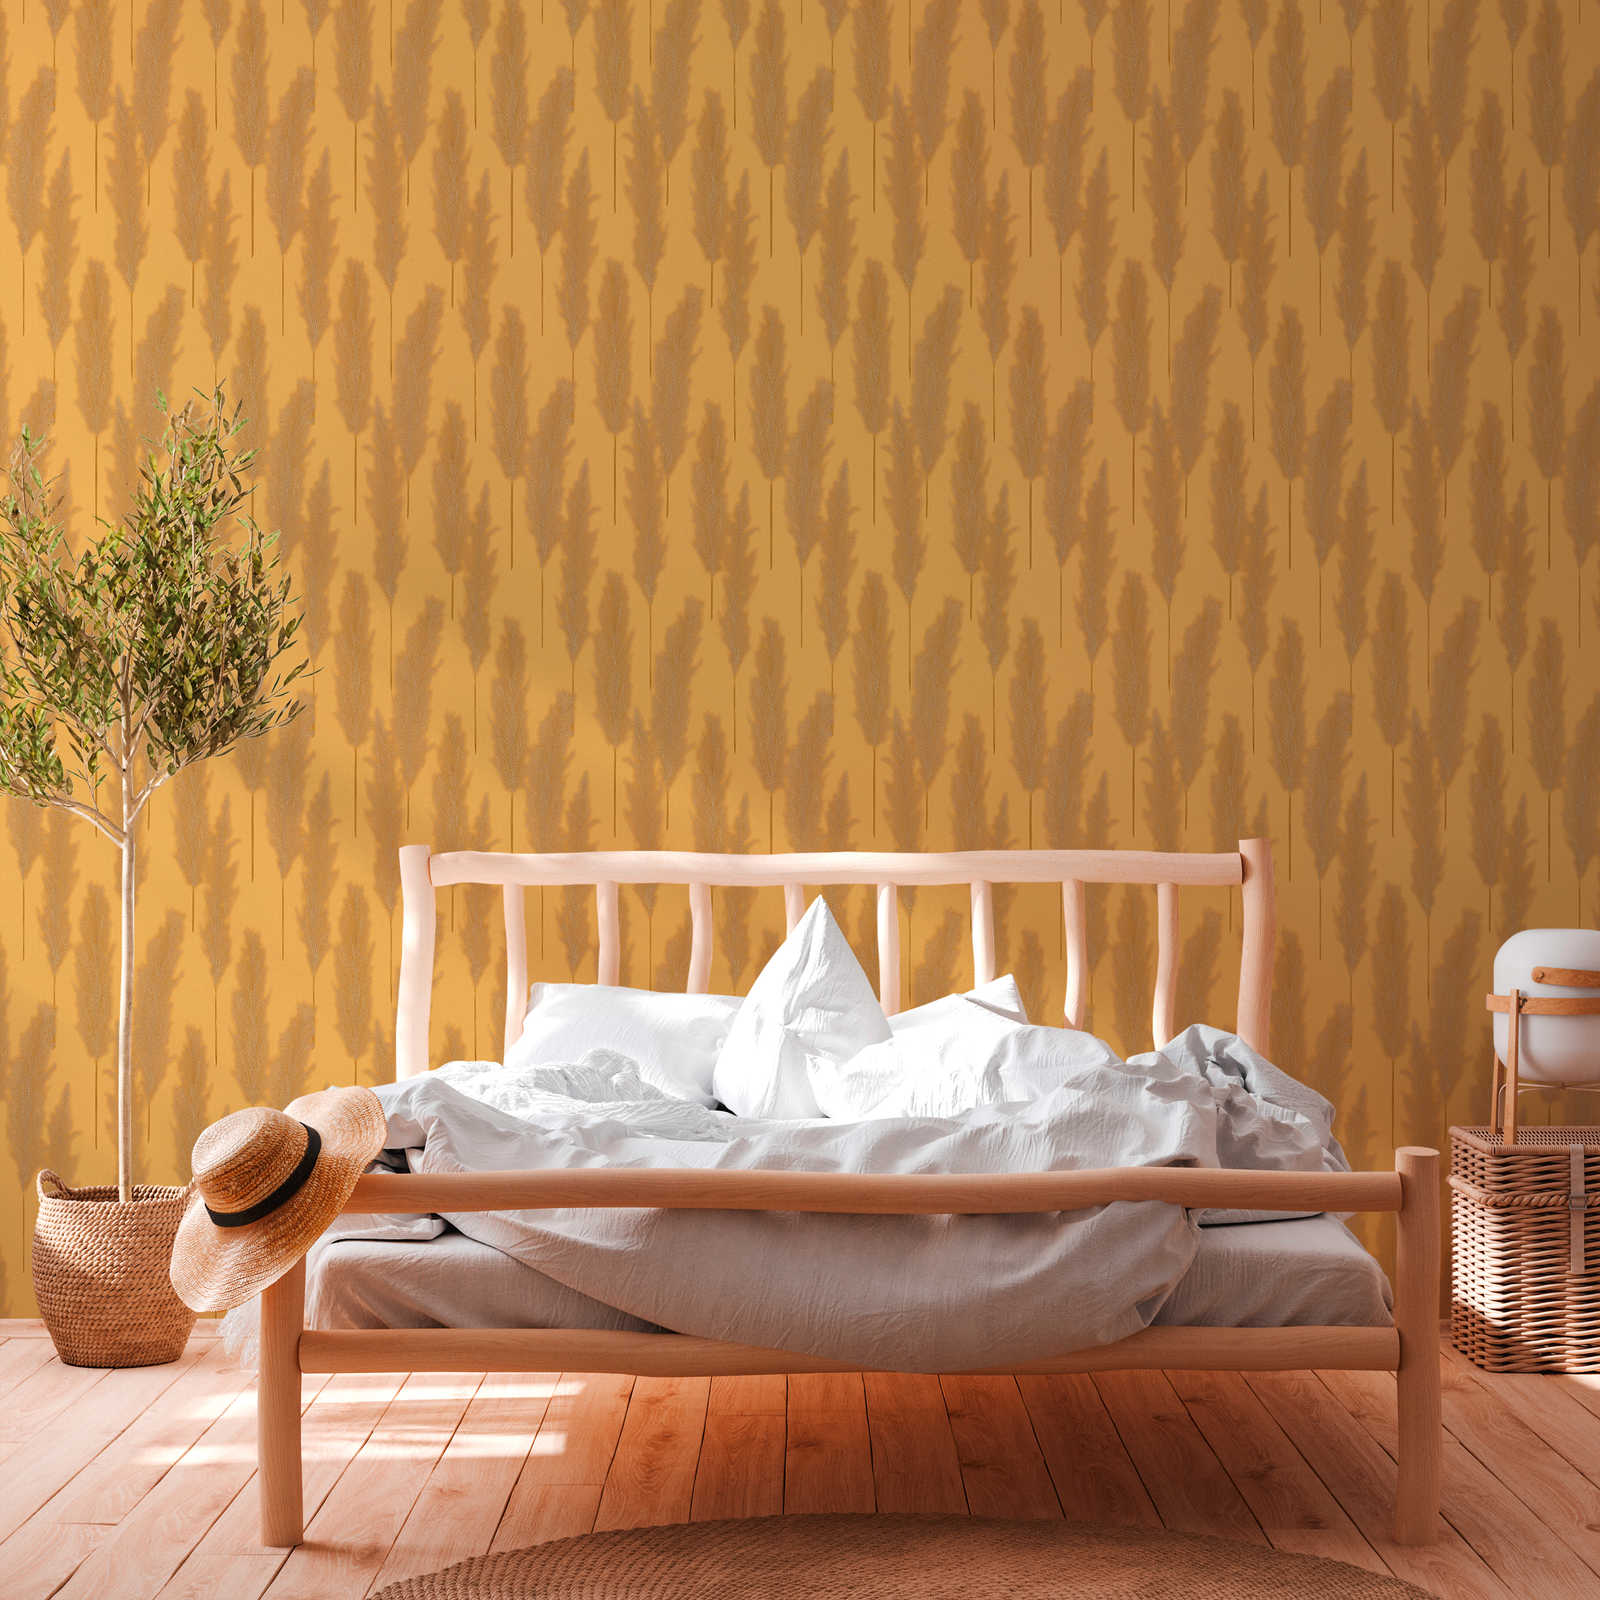             Wallpaper with pampas grass design - yellow, metallic
        